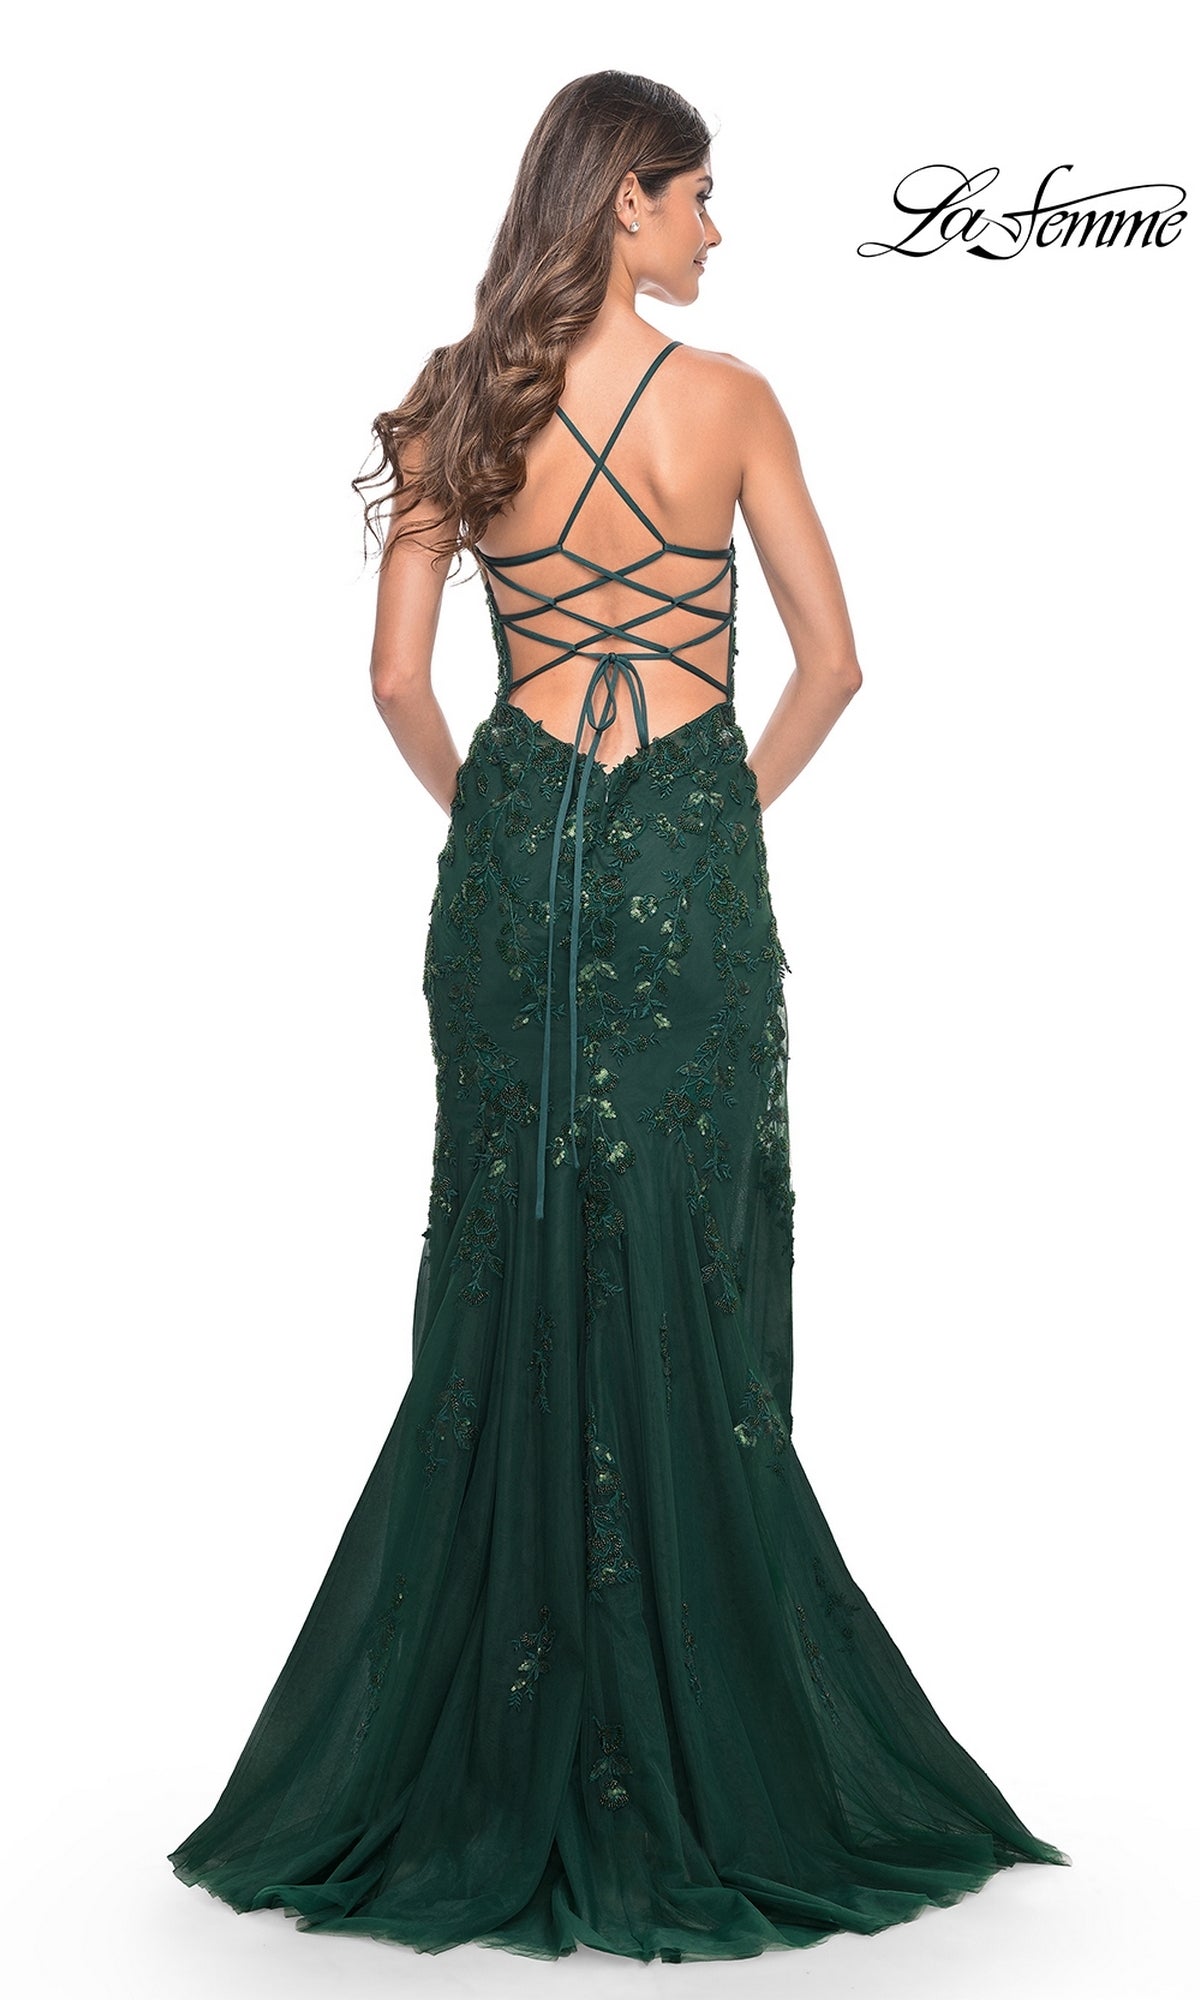 La Femme Backless Long Lace Prom Dress 32307